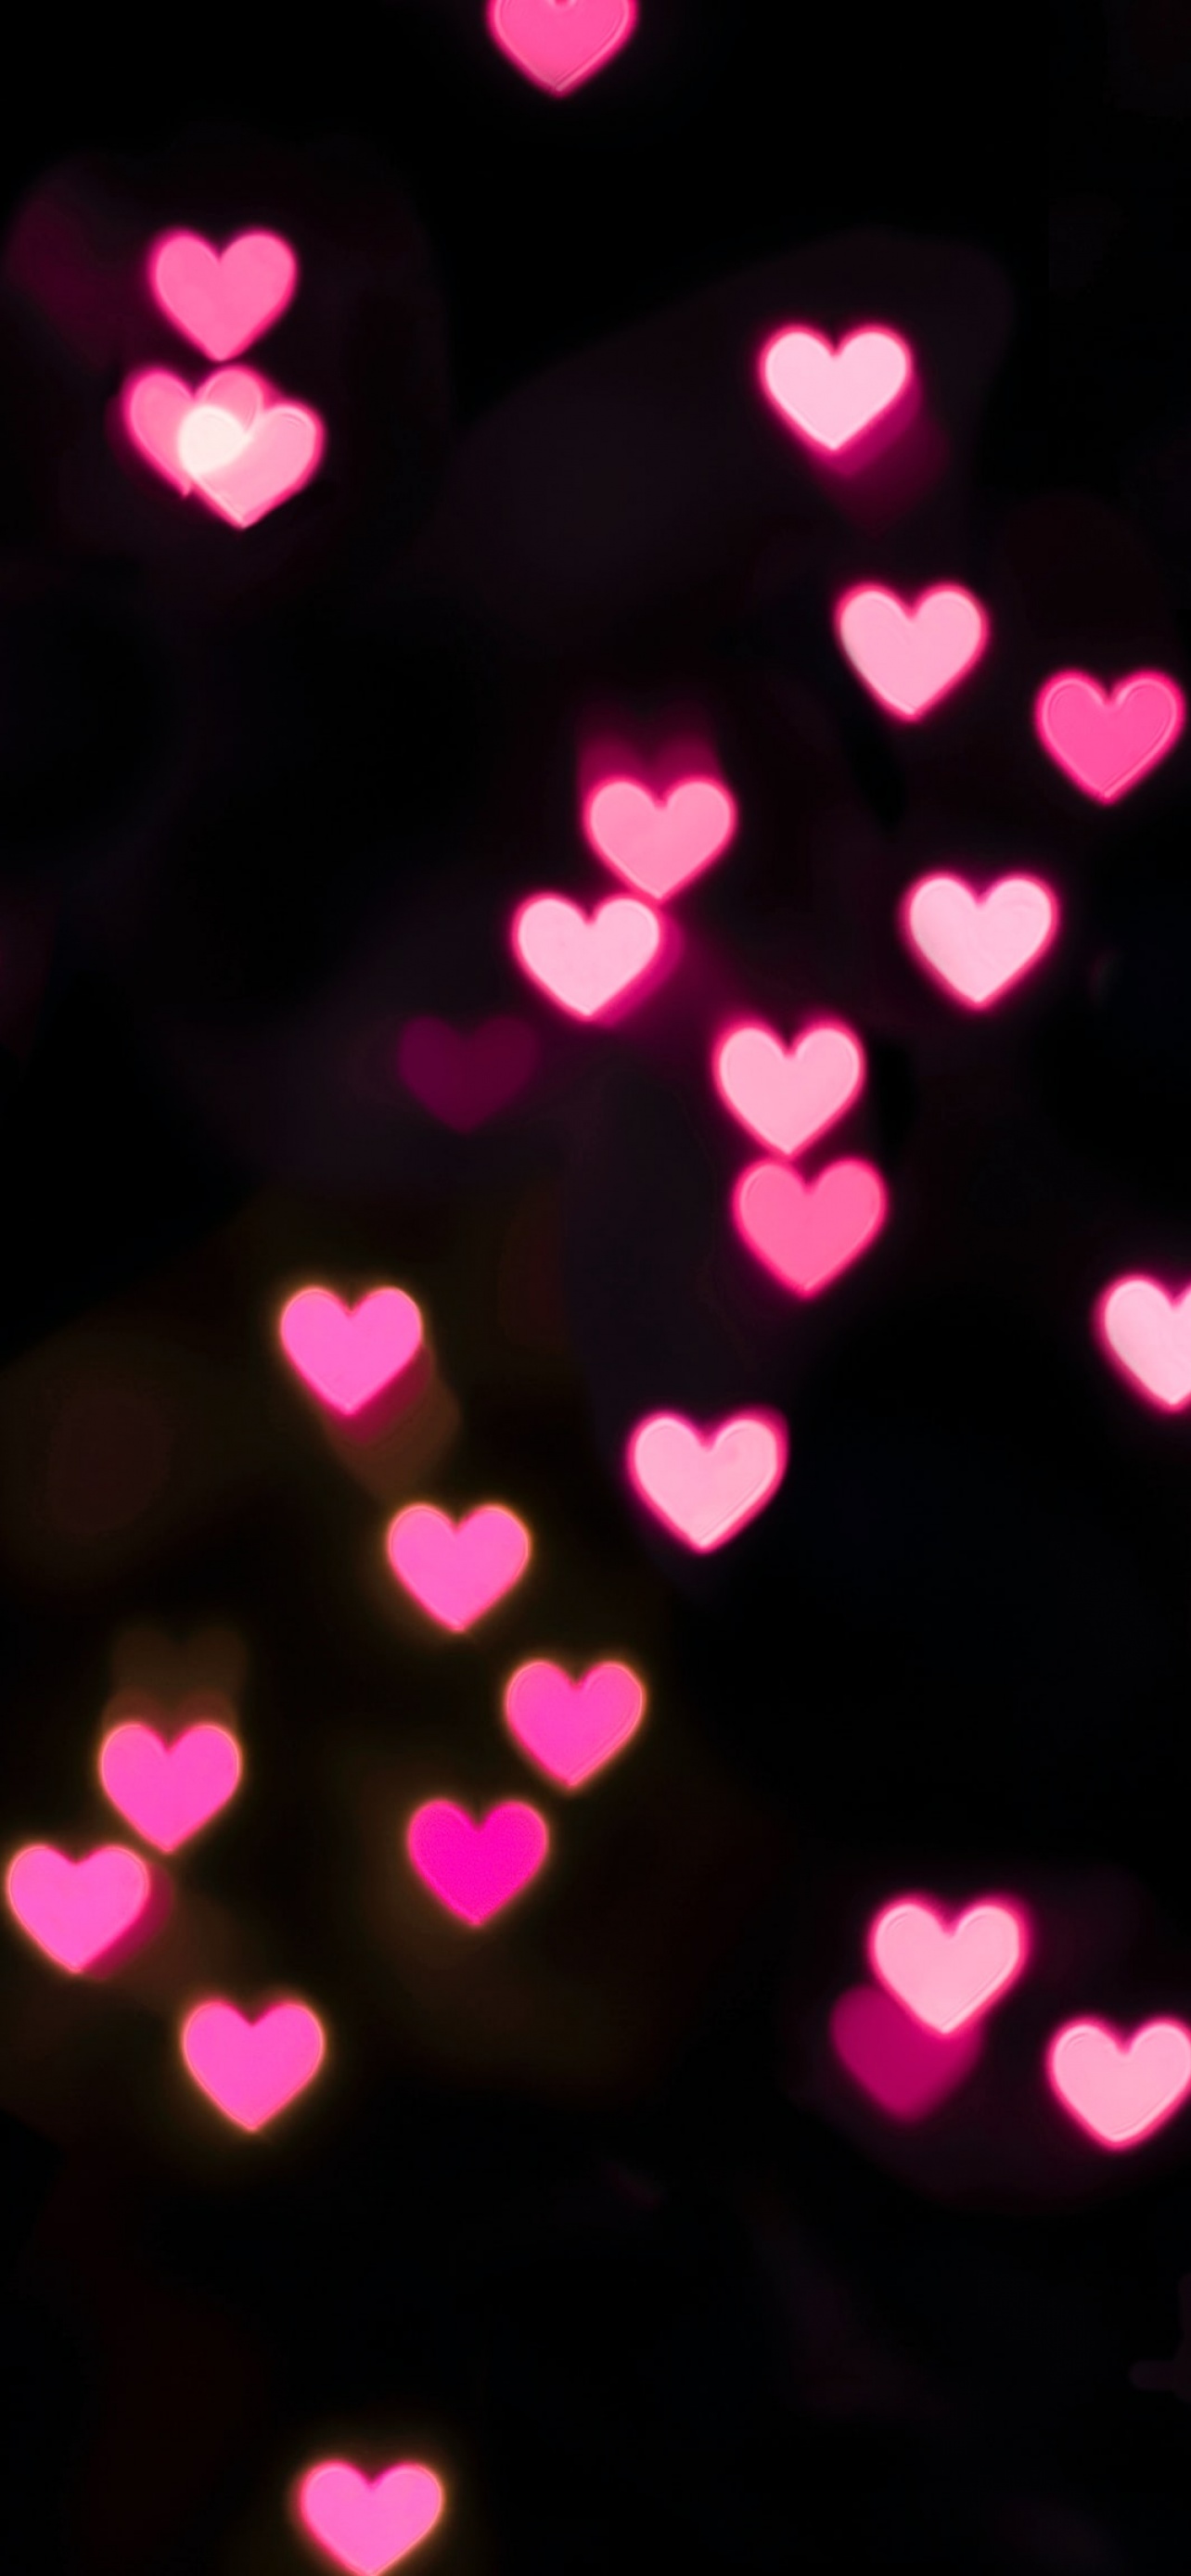 Pink hearts Wallpaper 4K, Black background, Bokeh, Glowing lights, Vibrant, Black/Dark, 3409